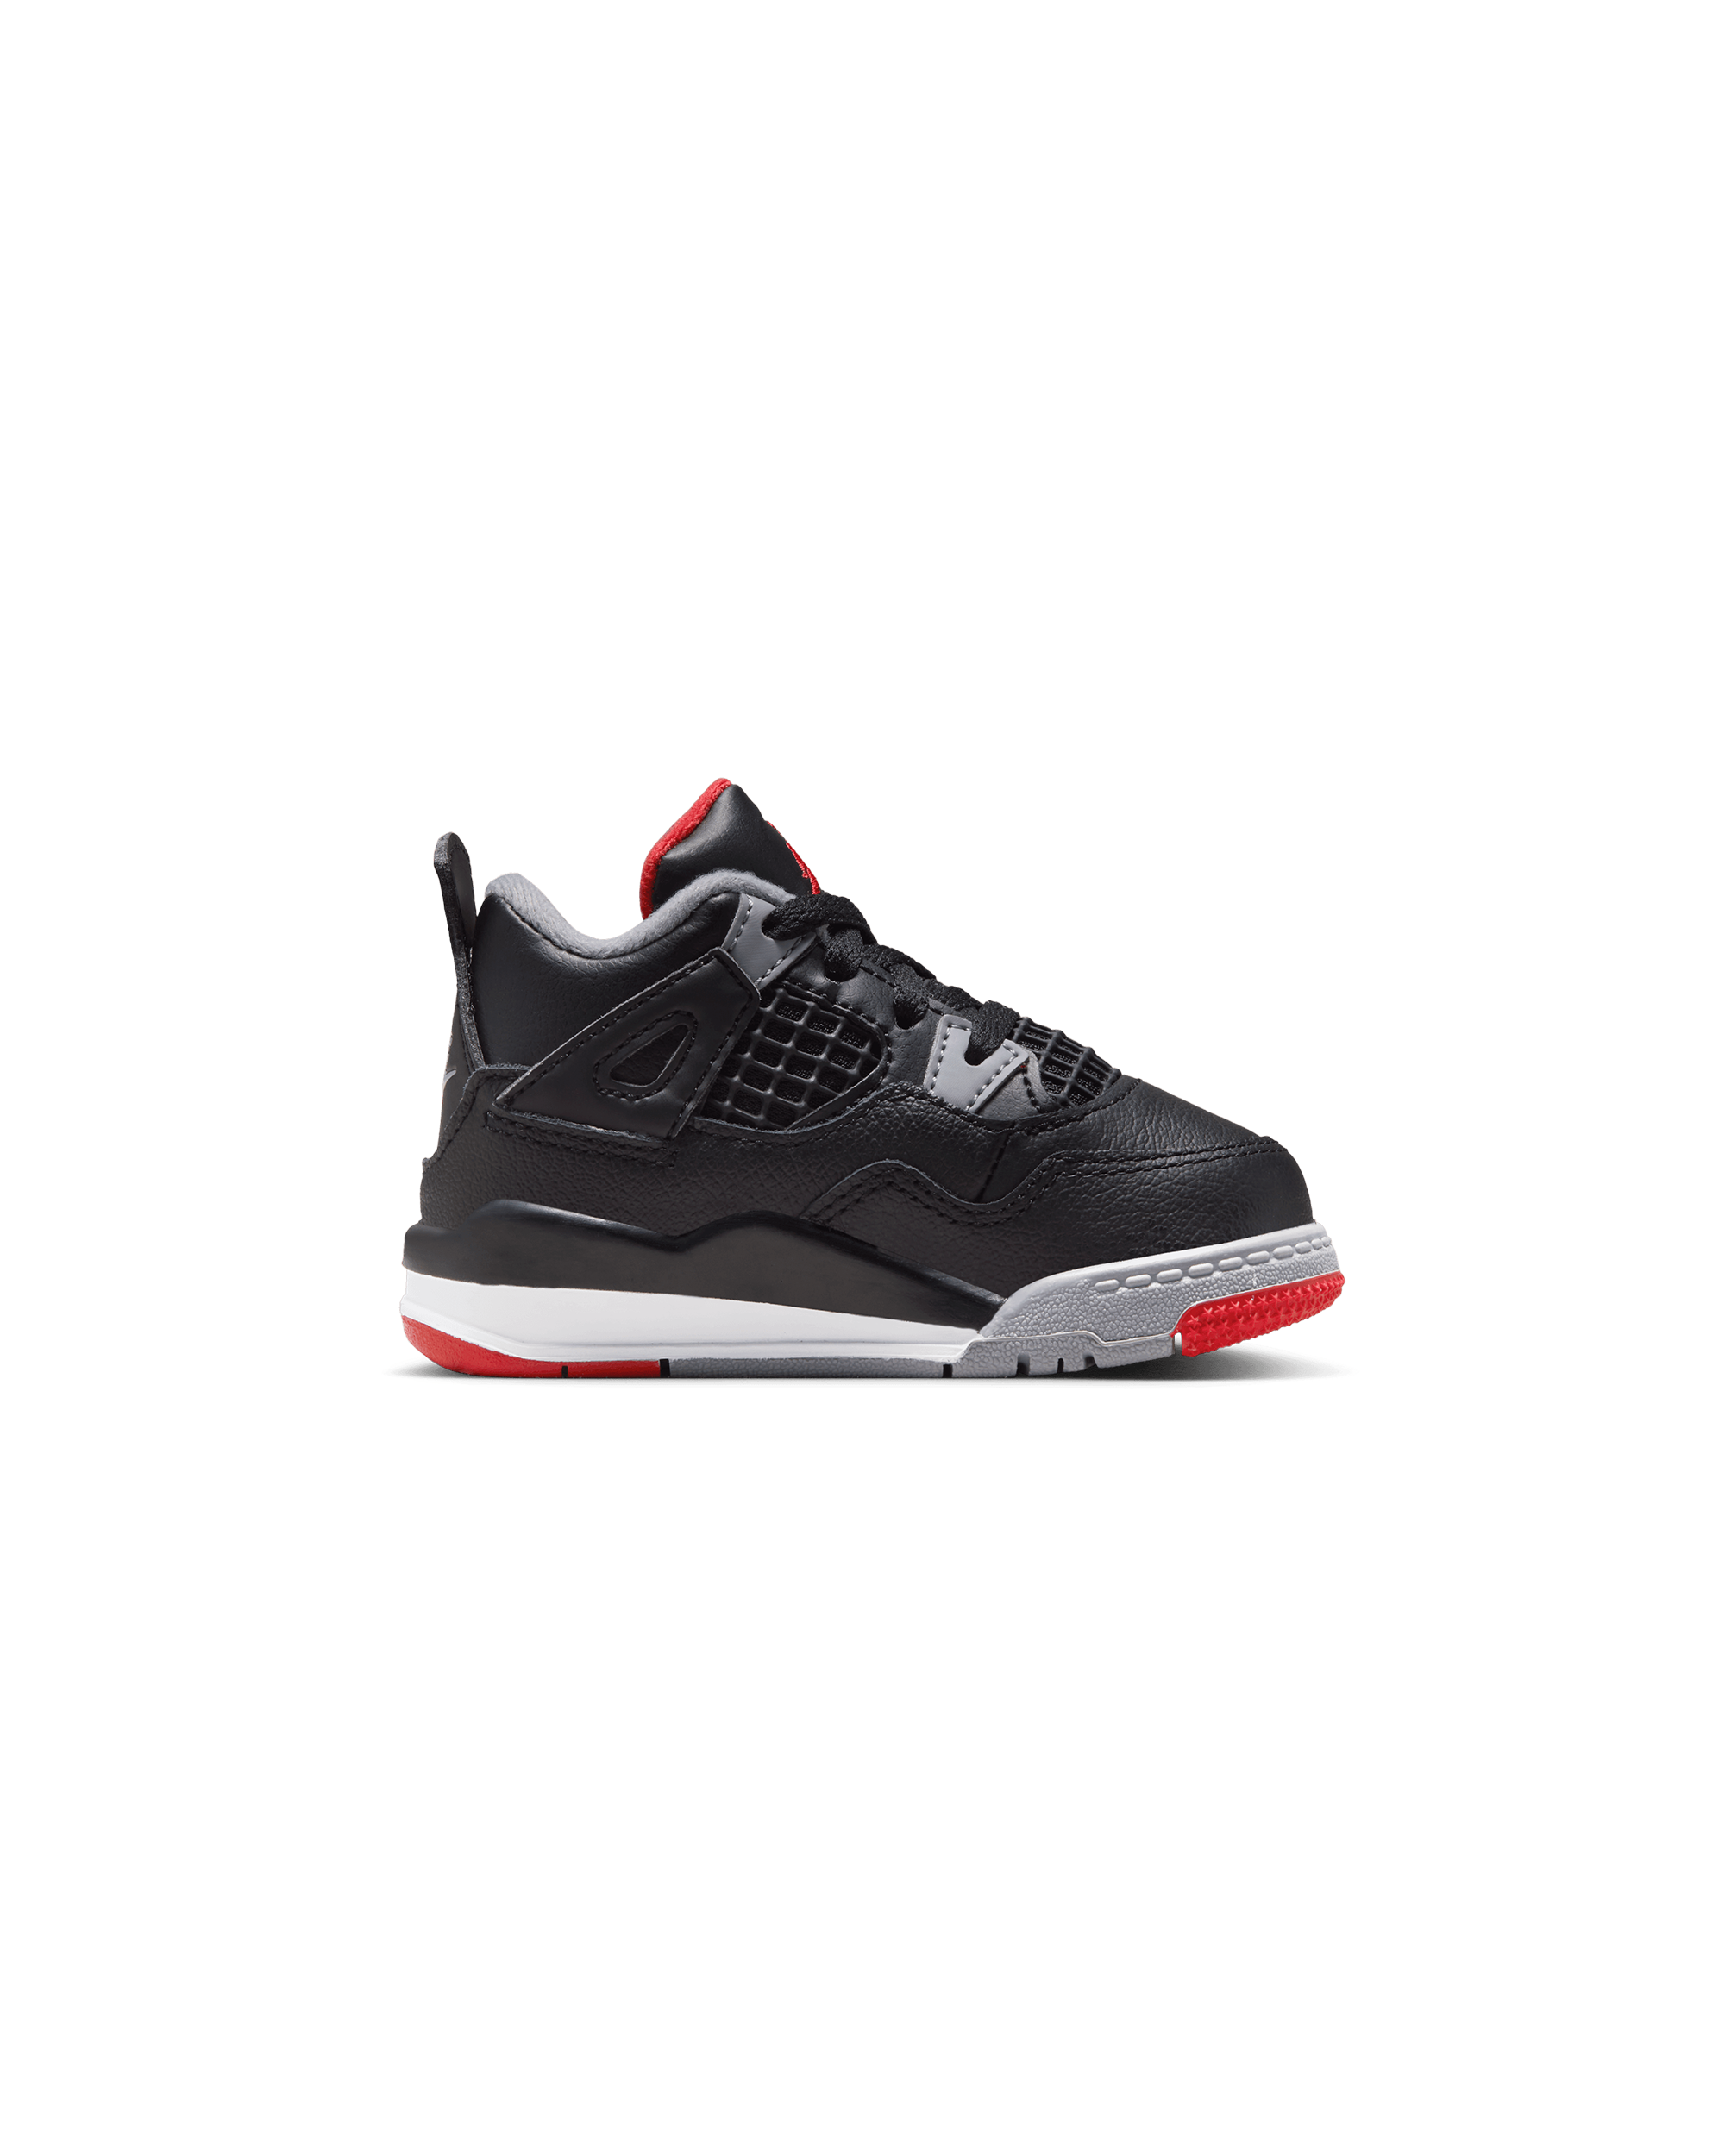 Air Jordan 4 Retro "Bred Reimagined" (TD) - Black / Fire Red / Grey / White